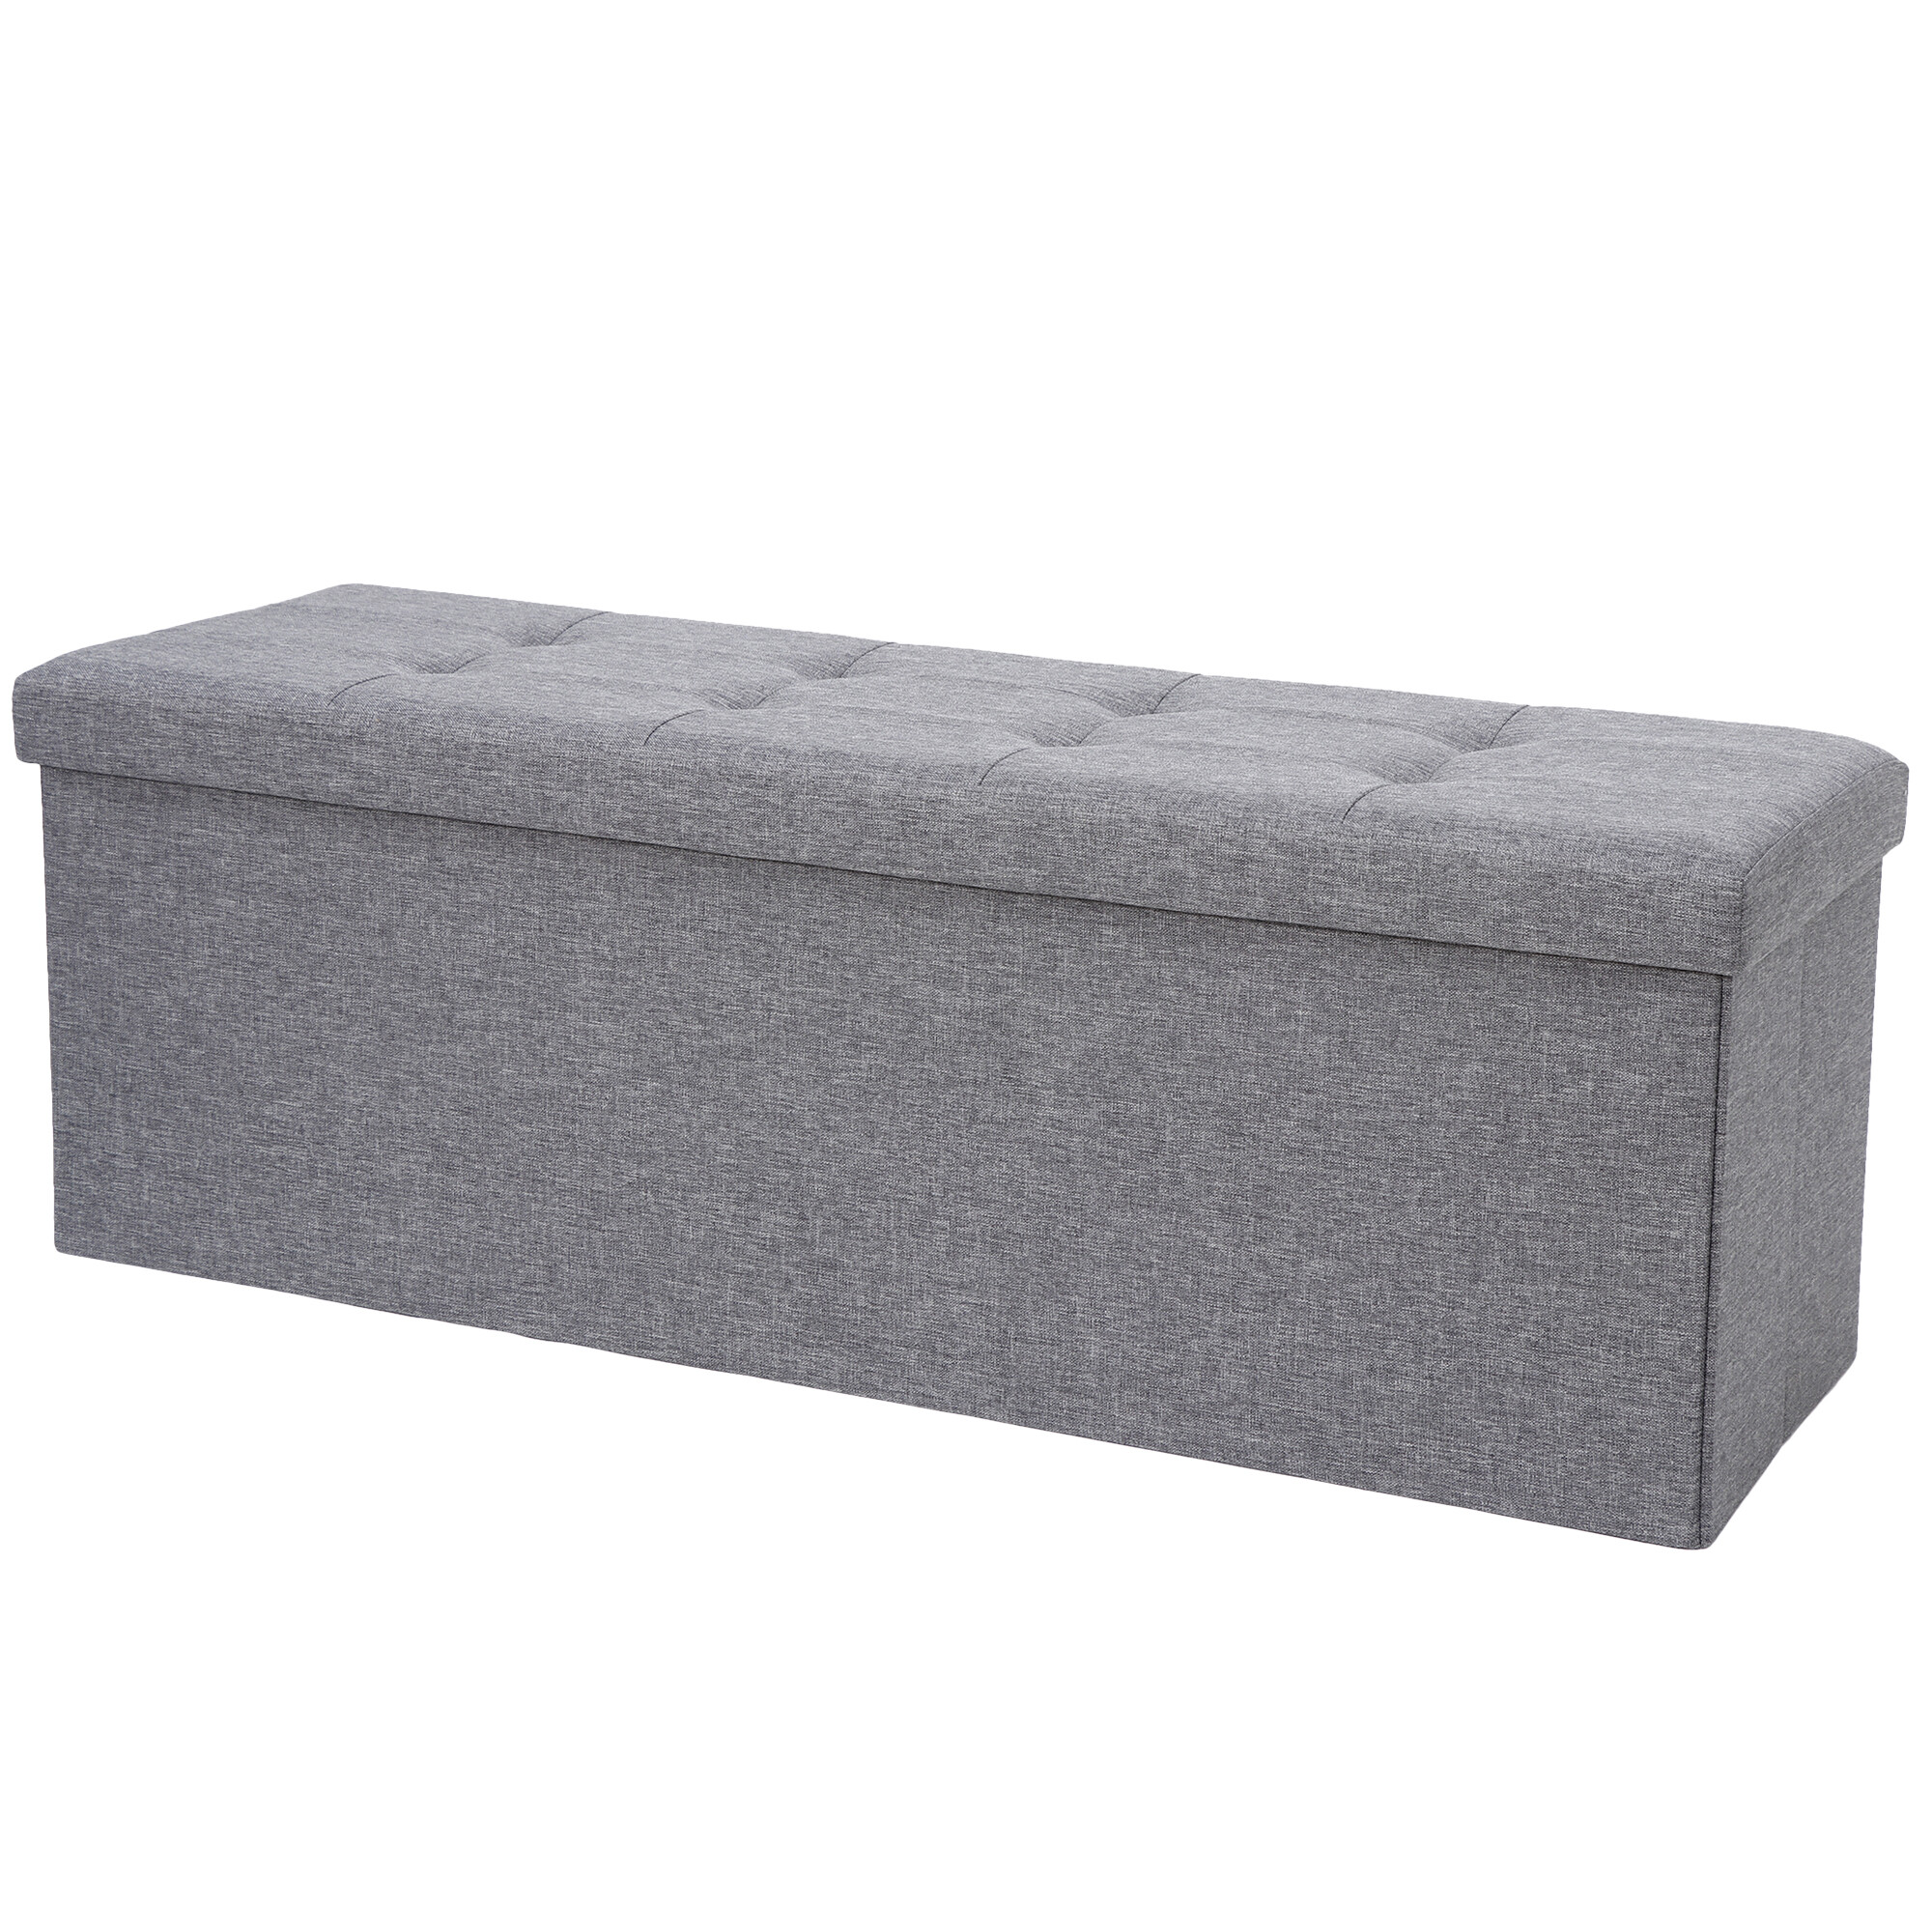 HomGarden 43'' Linen Storage Ottoman Bench Foldable Modern Footrest Stool W/ Divider, Gray - image 1 of 11